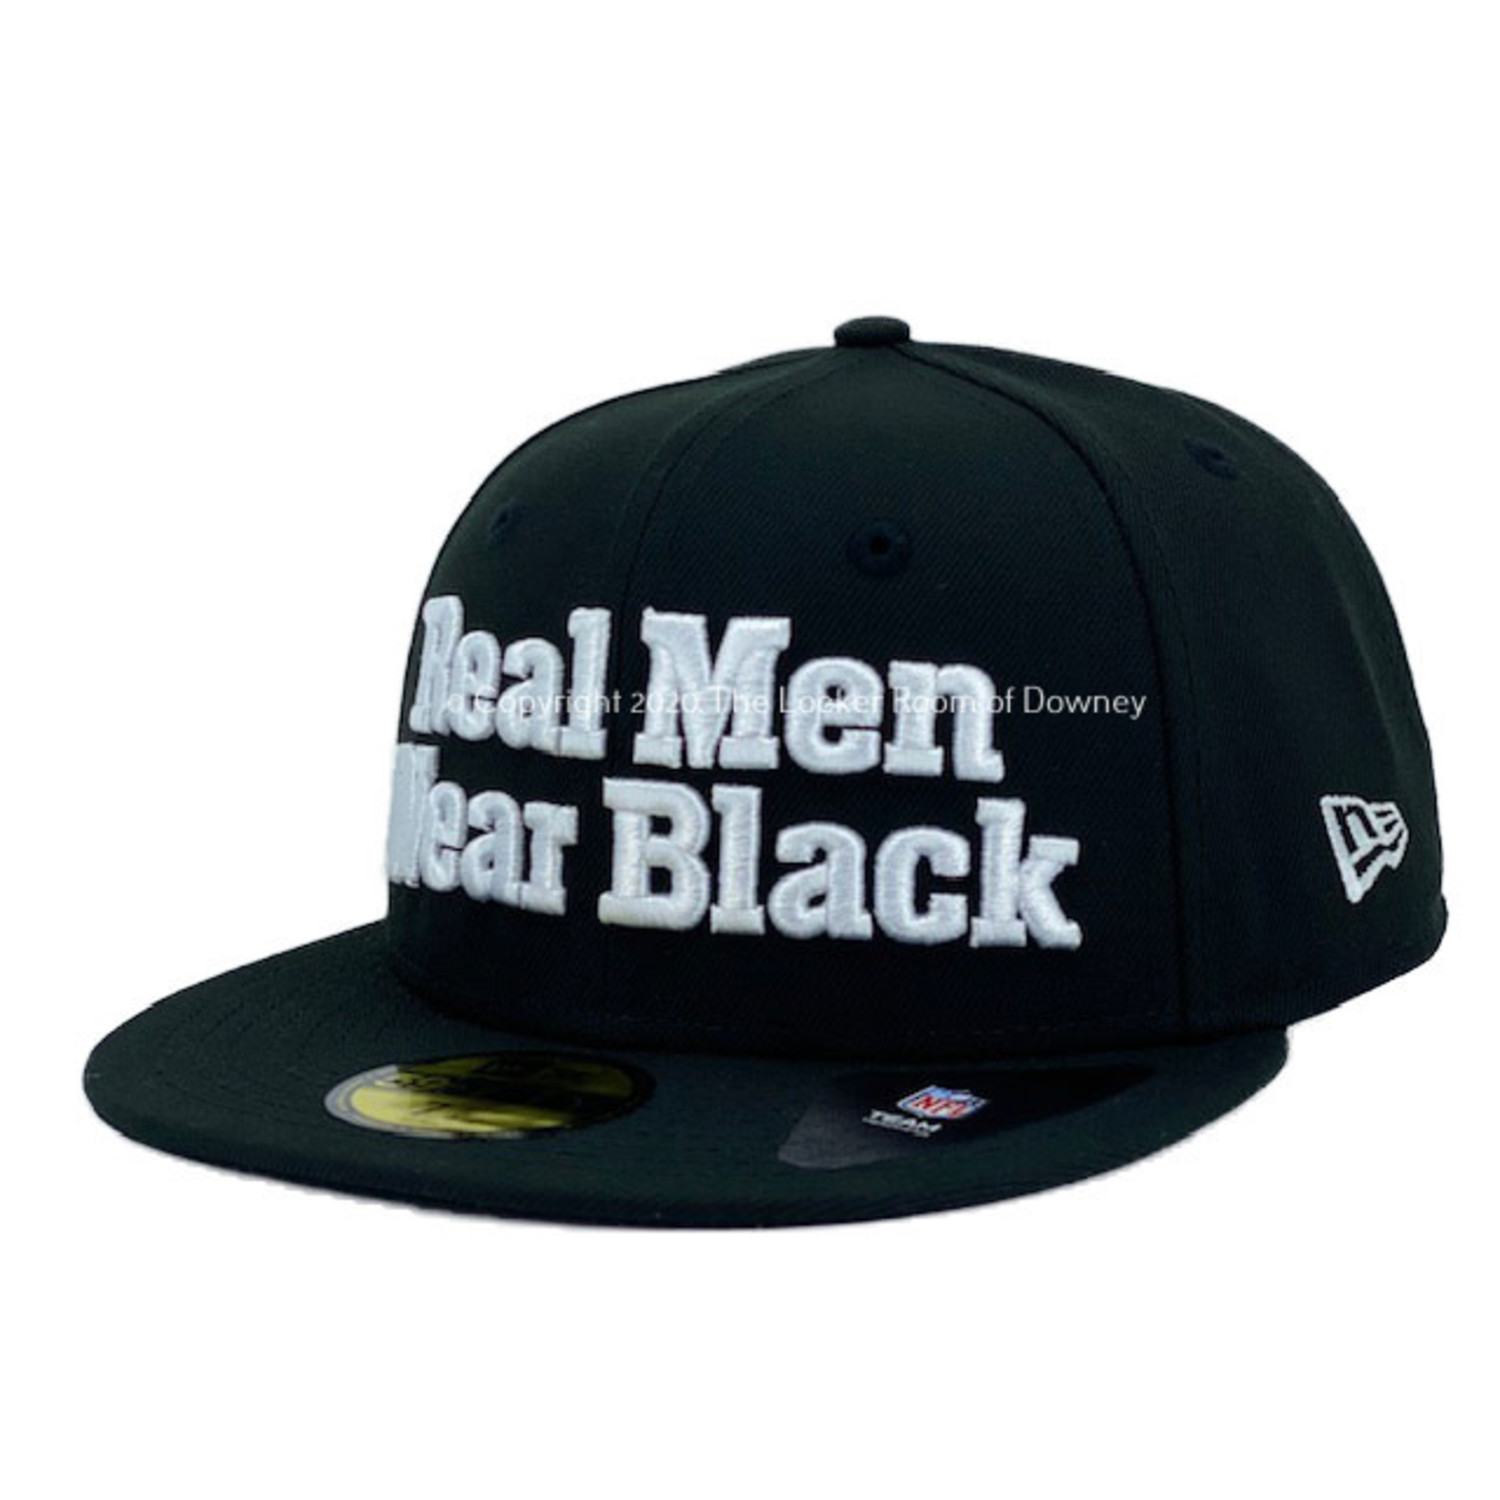 Raiders Real Men Wear Black - The Locker Room of Downey